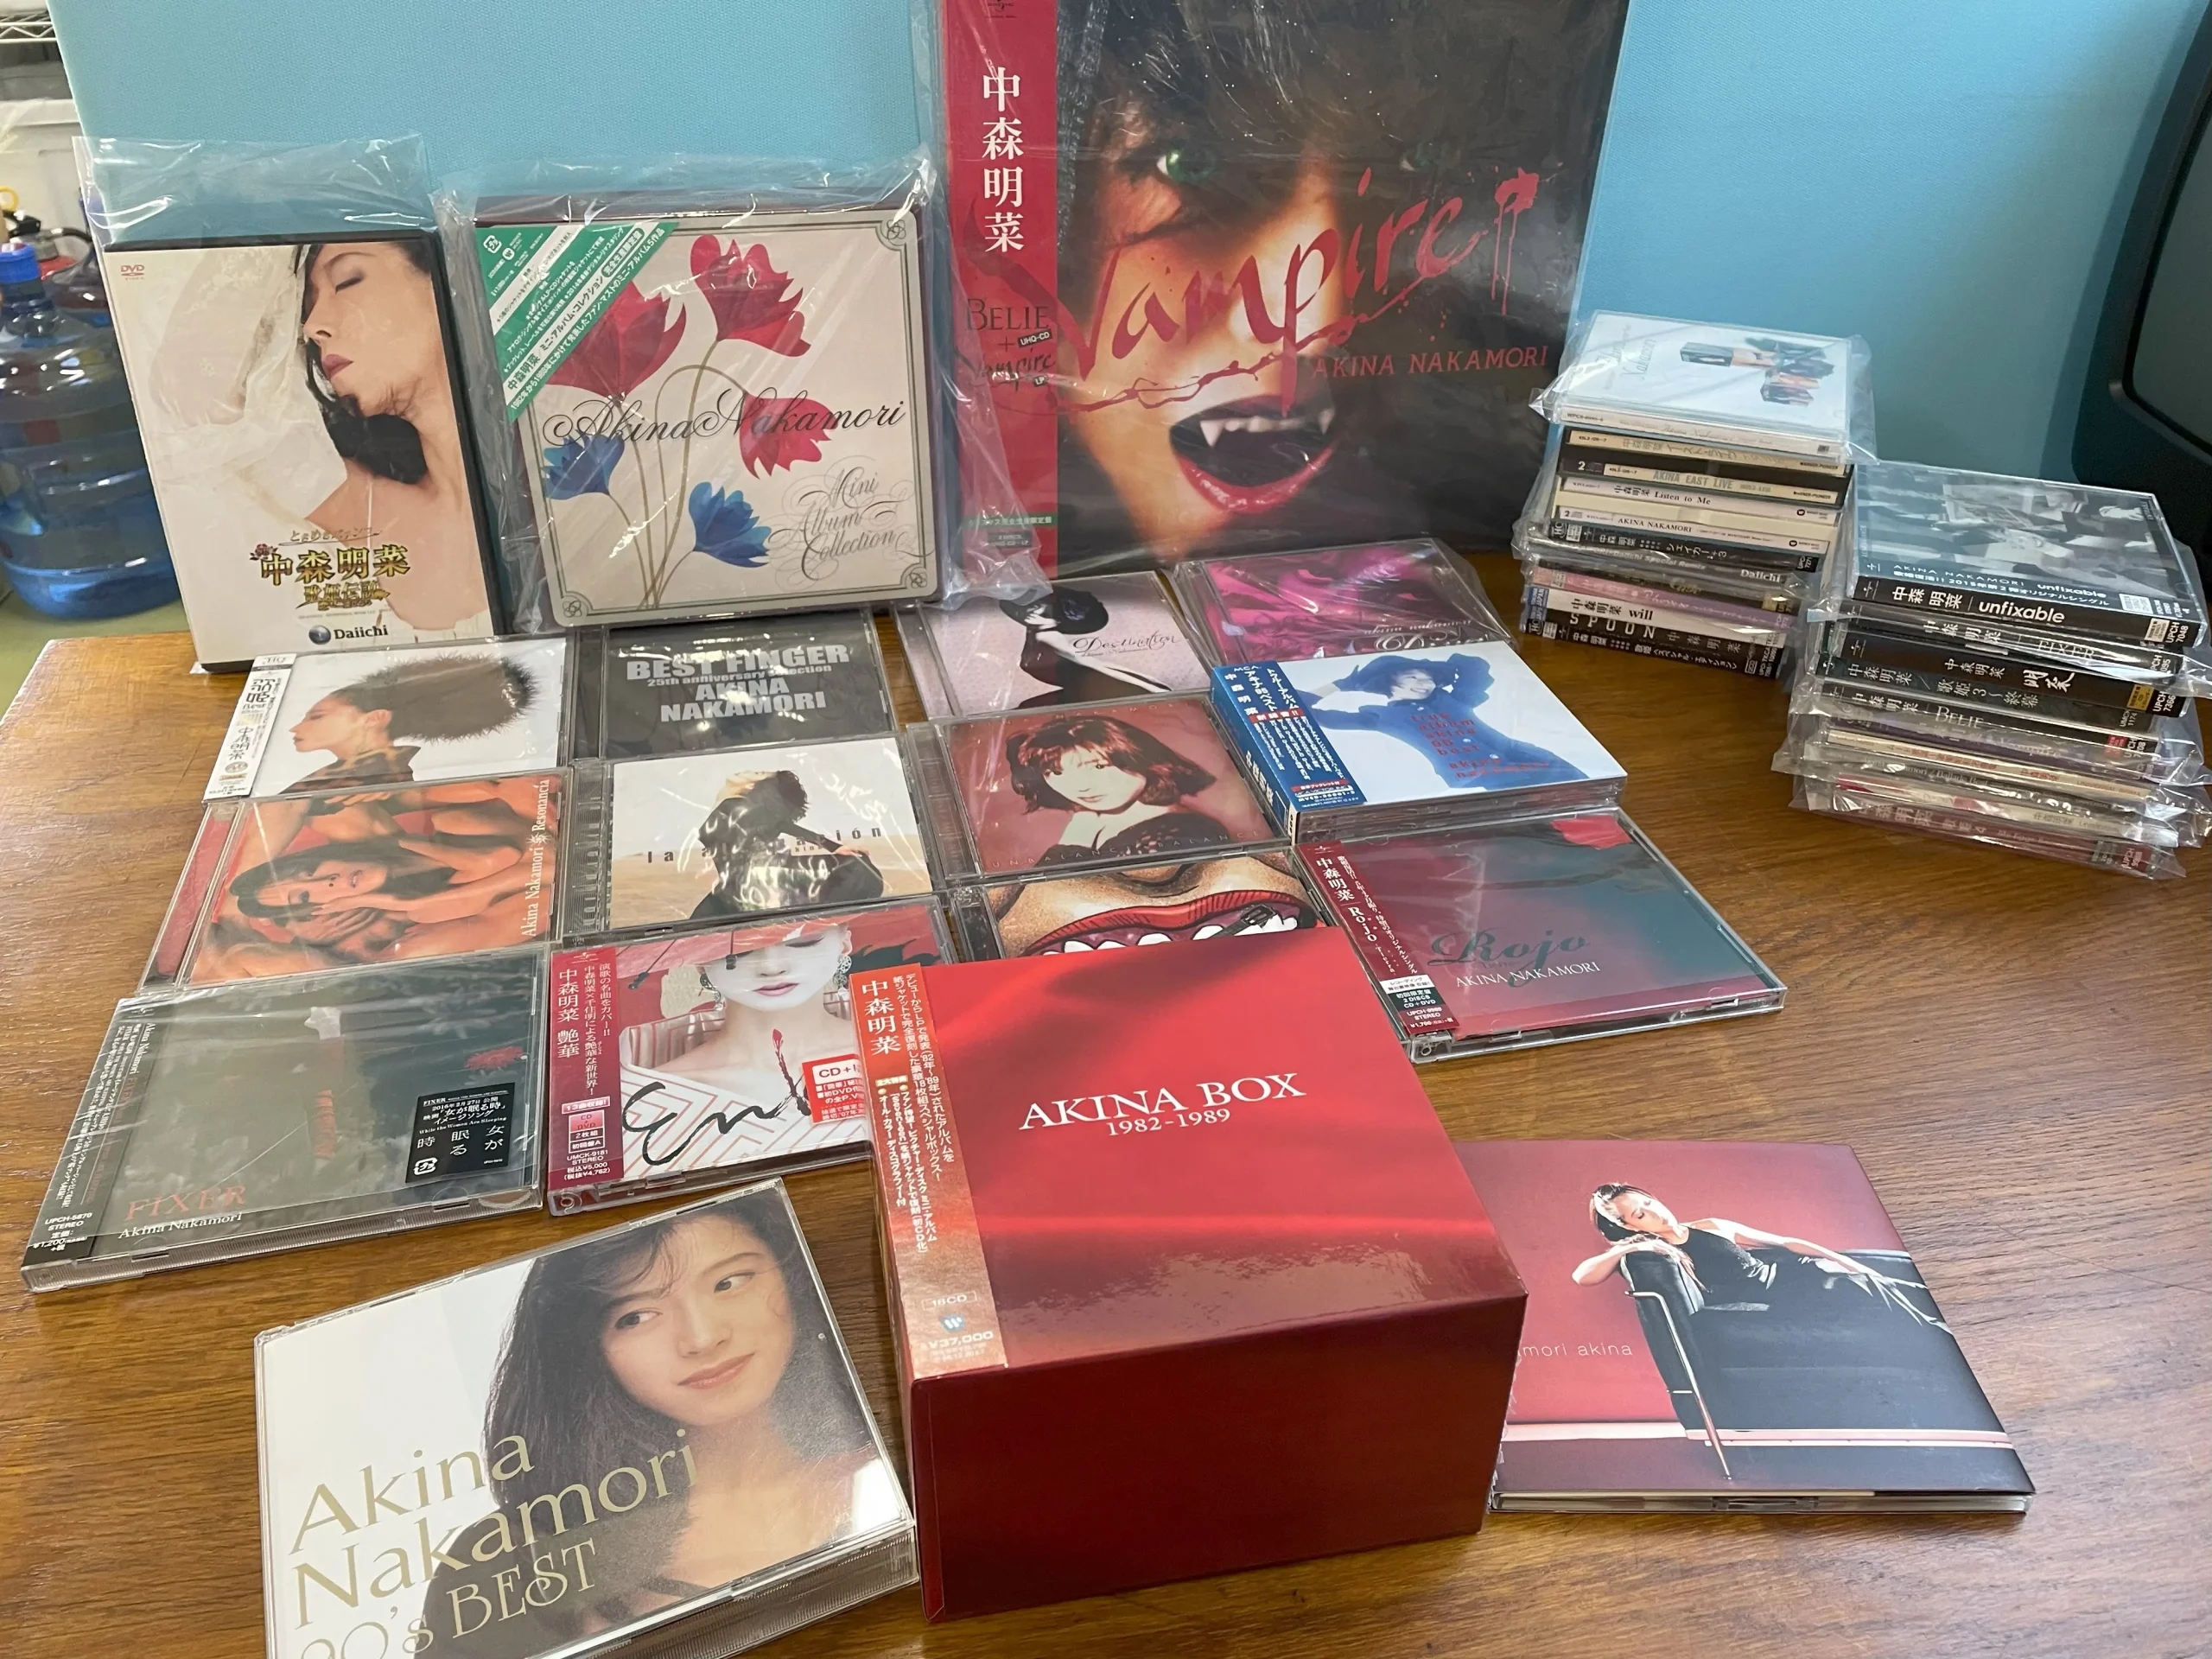 中森明菜　AKINA BOX や 歌姫伝説~’90s BEST [初回限定盤]など中森明菜CD